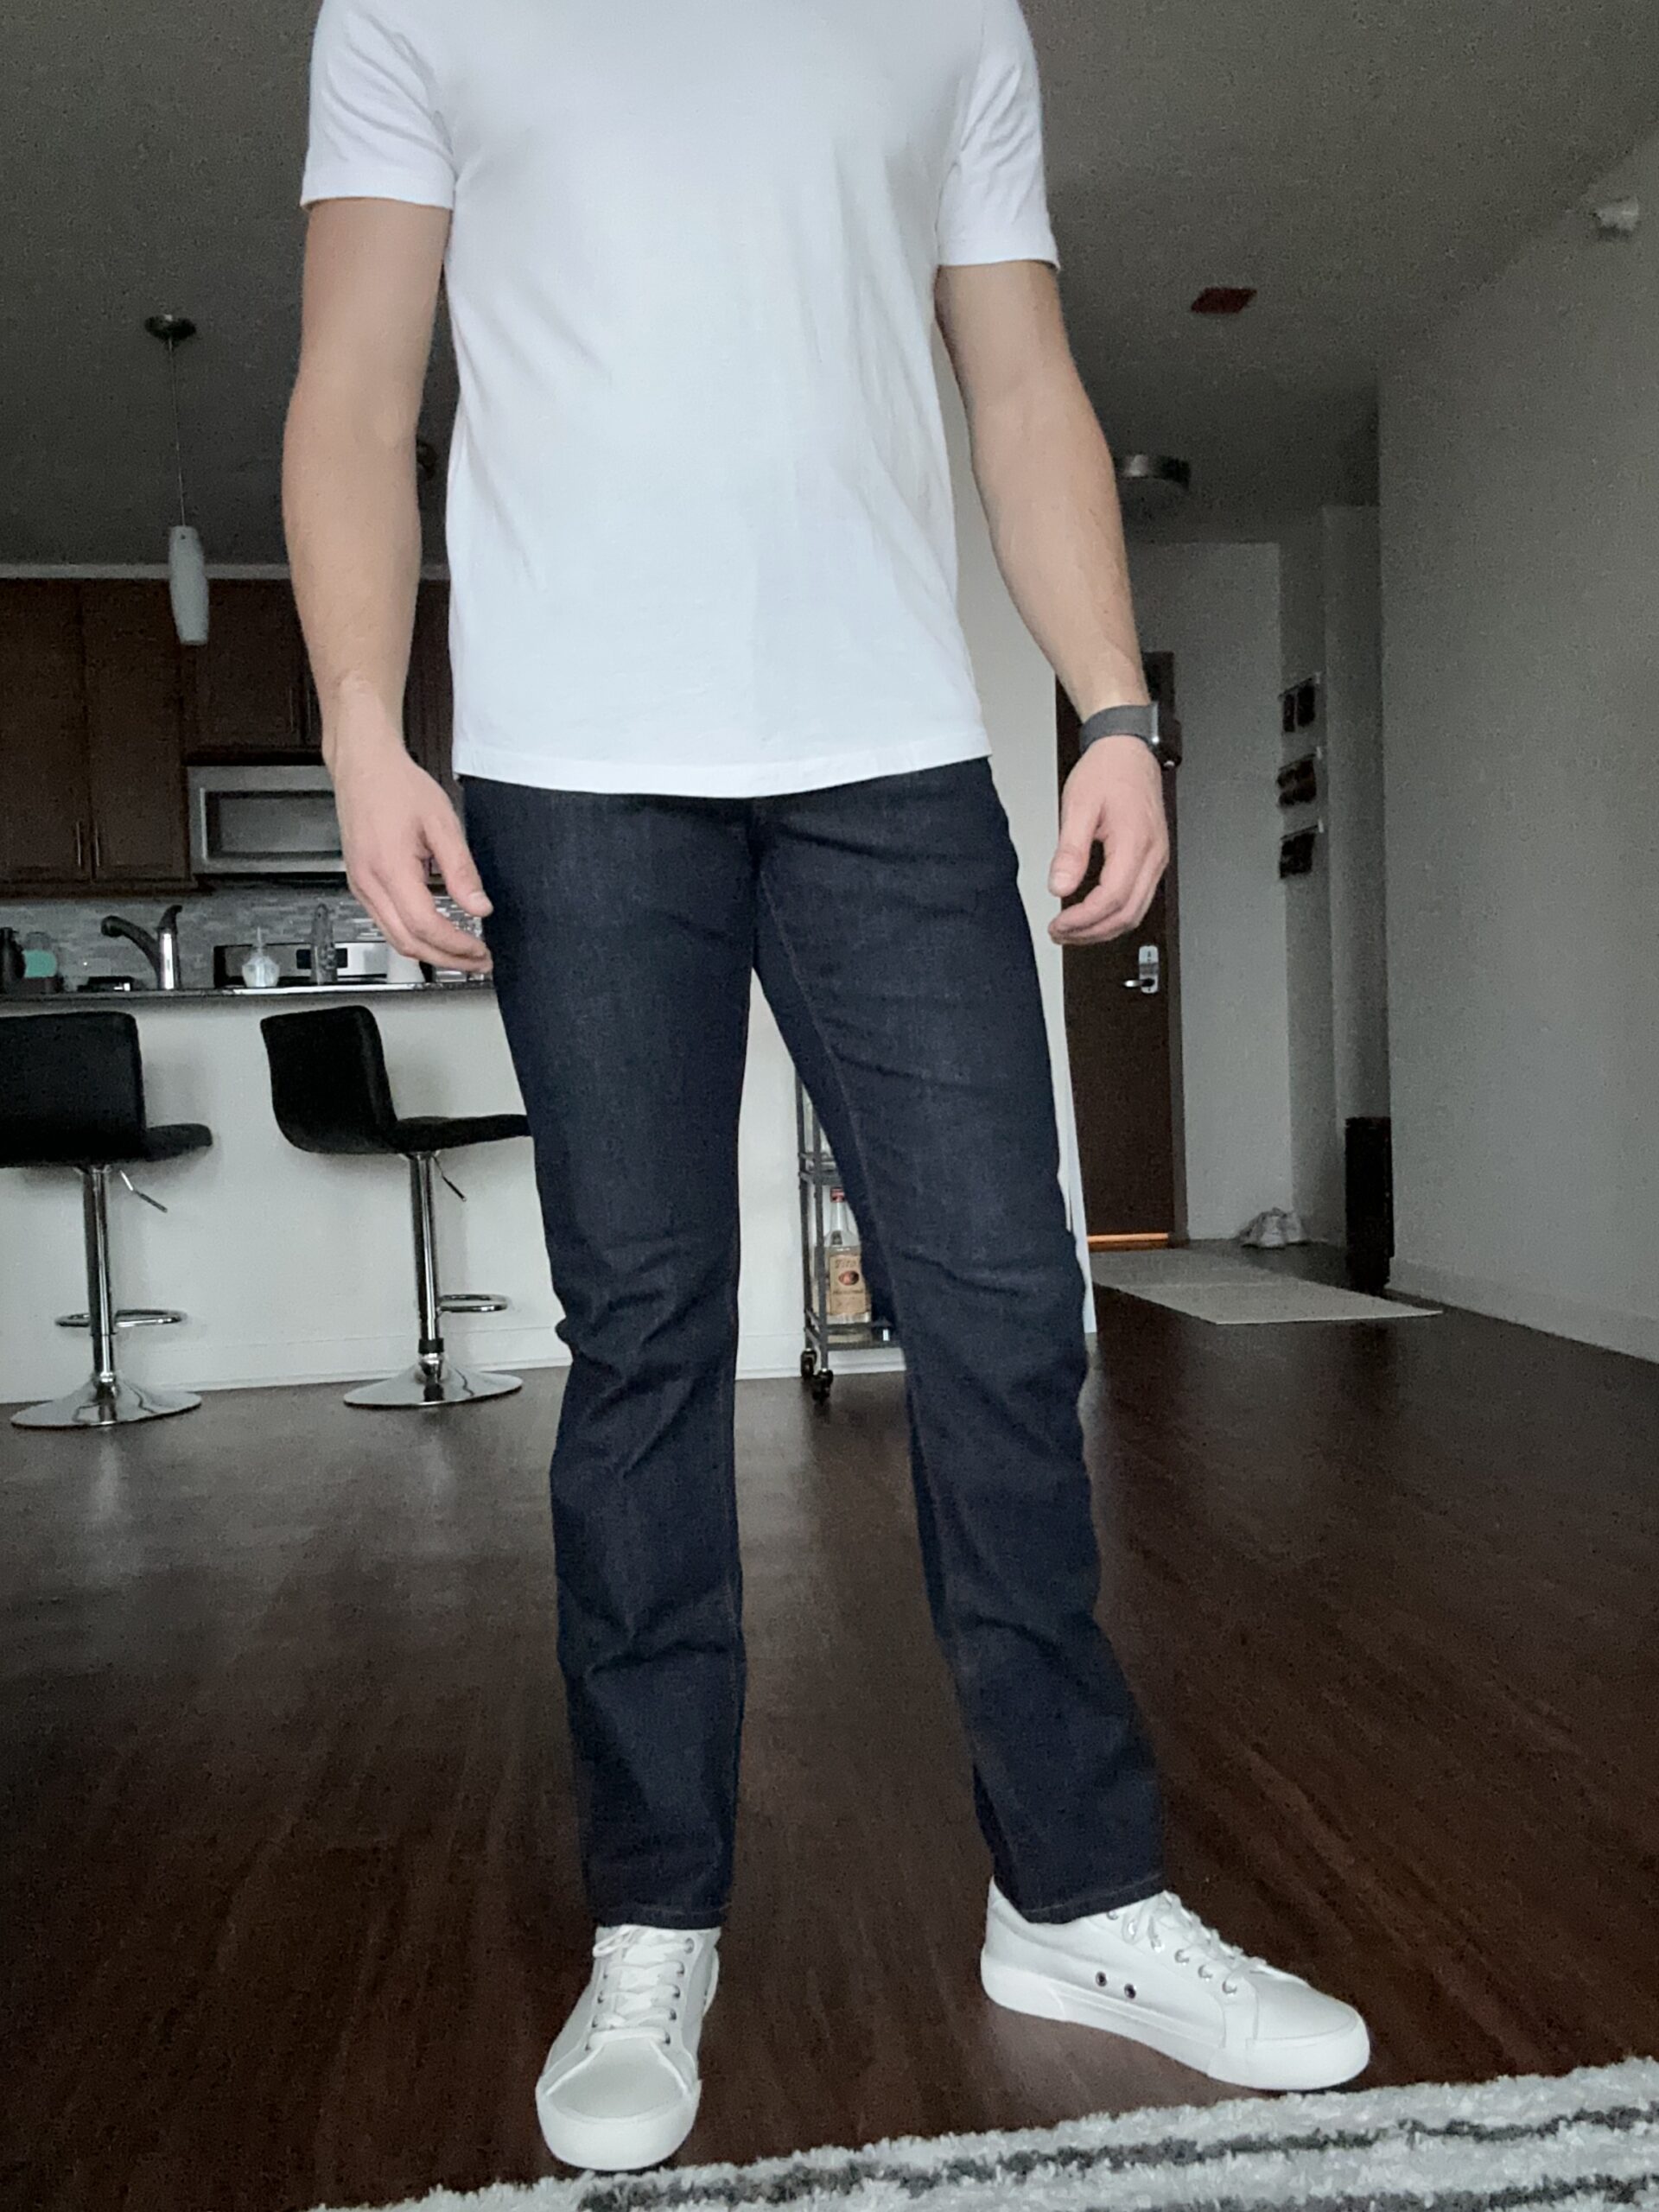 Joe Sanfilippo wearing the Slim Broome Jeans from Mott & Bow